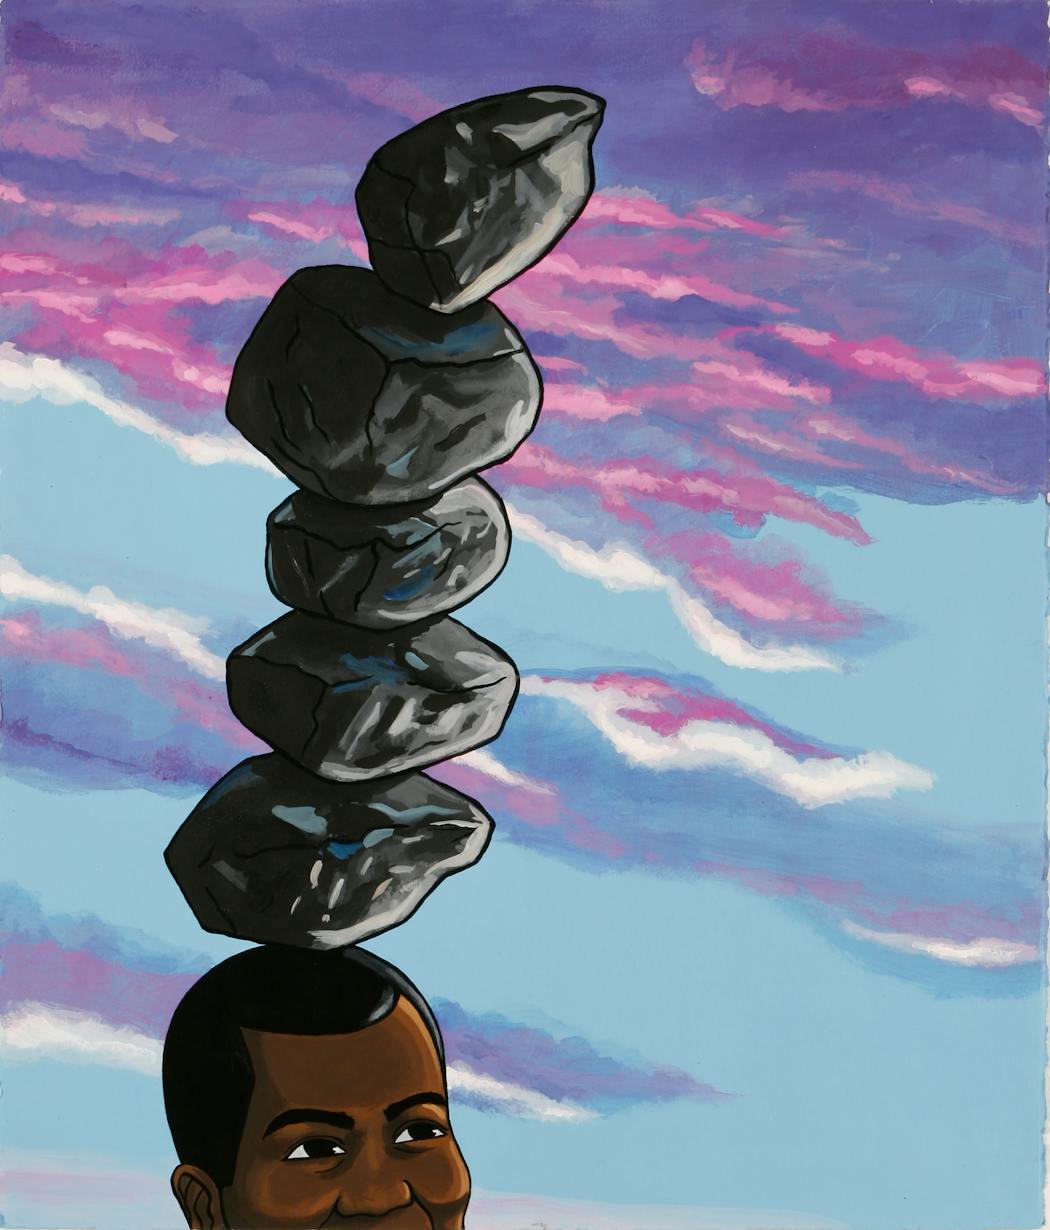 Lamar Peterson's 2005 painting 